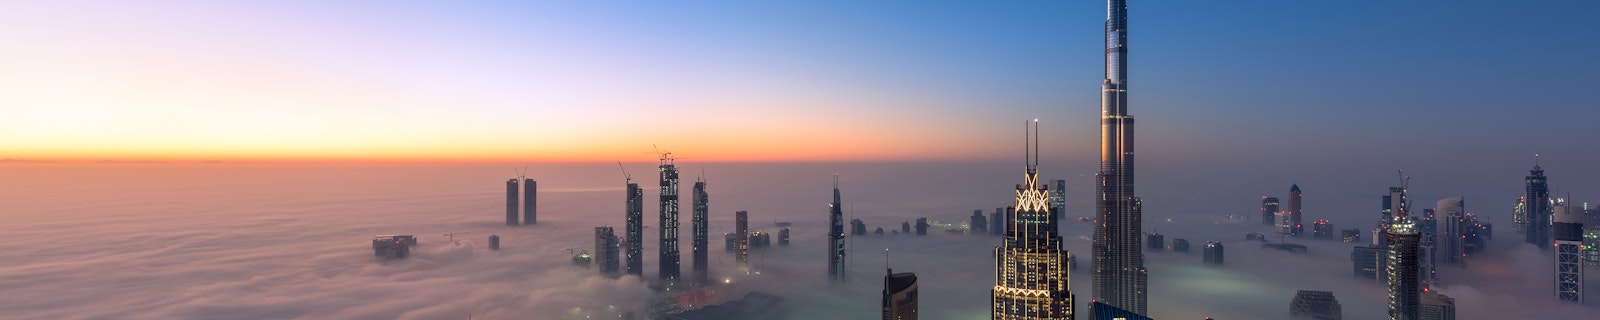 Cityscape of Dubai City